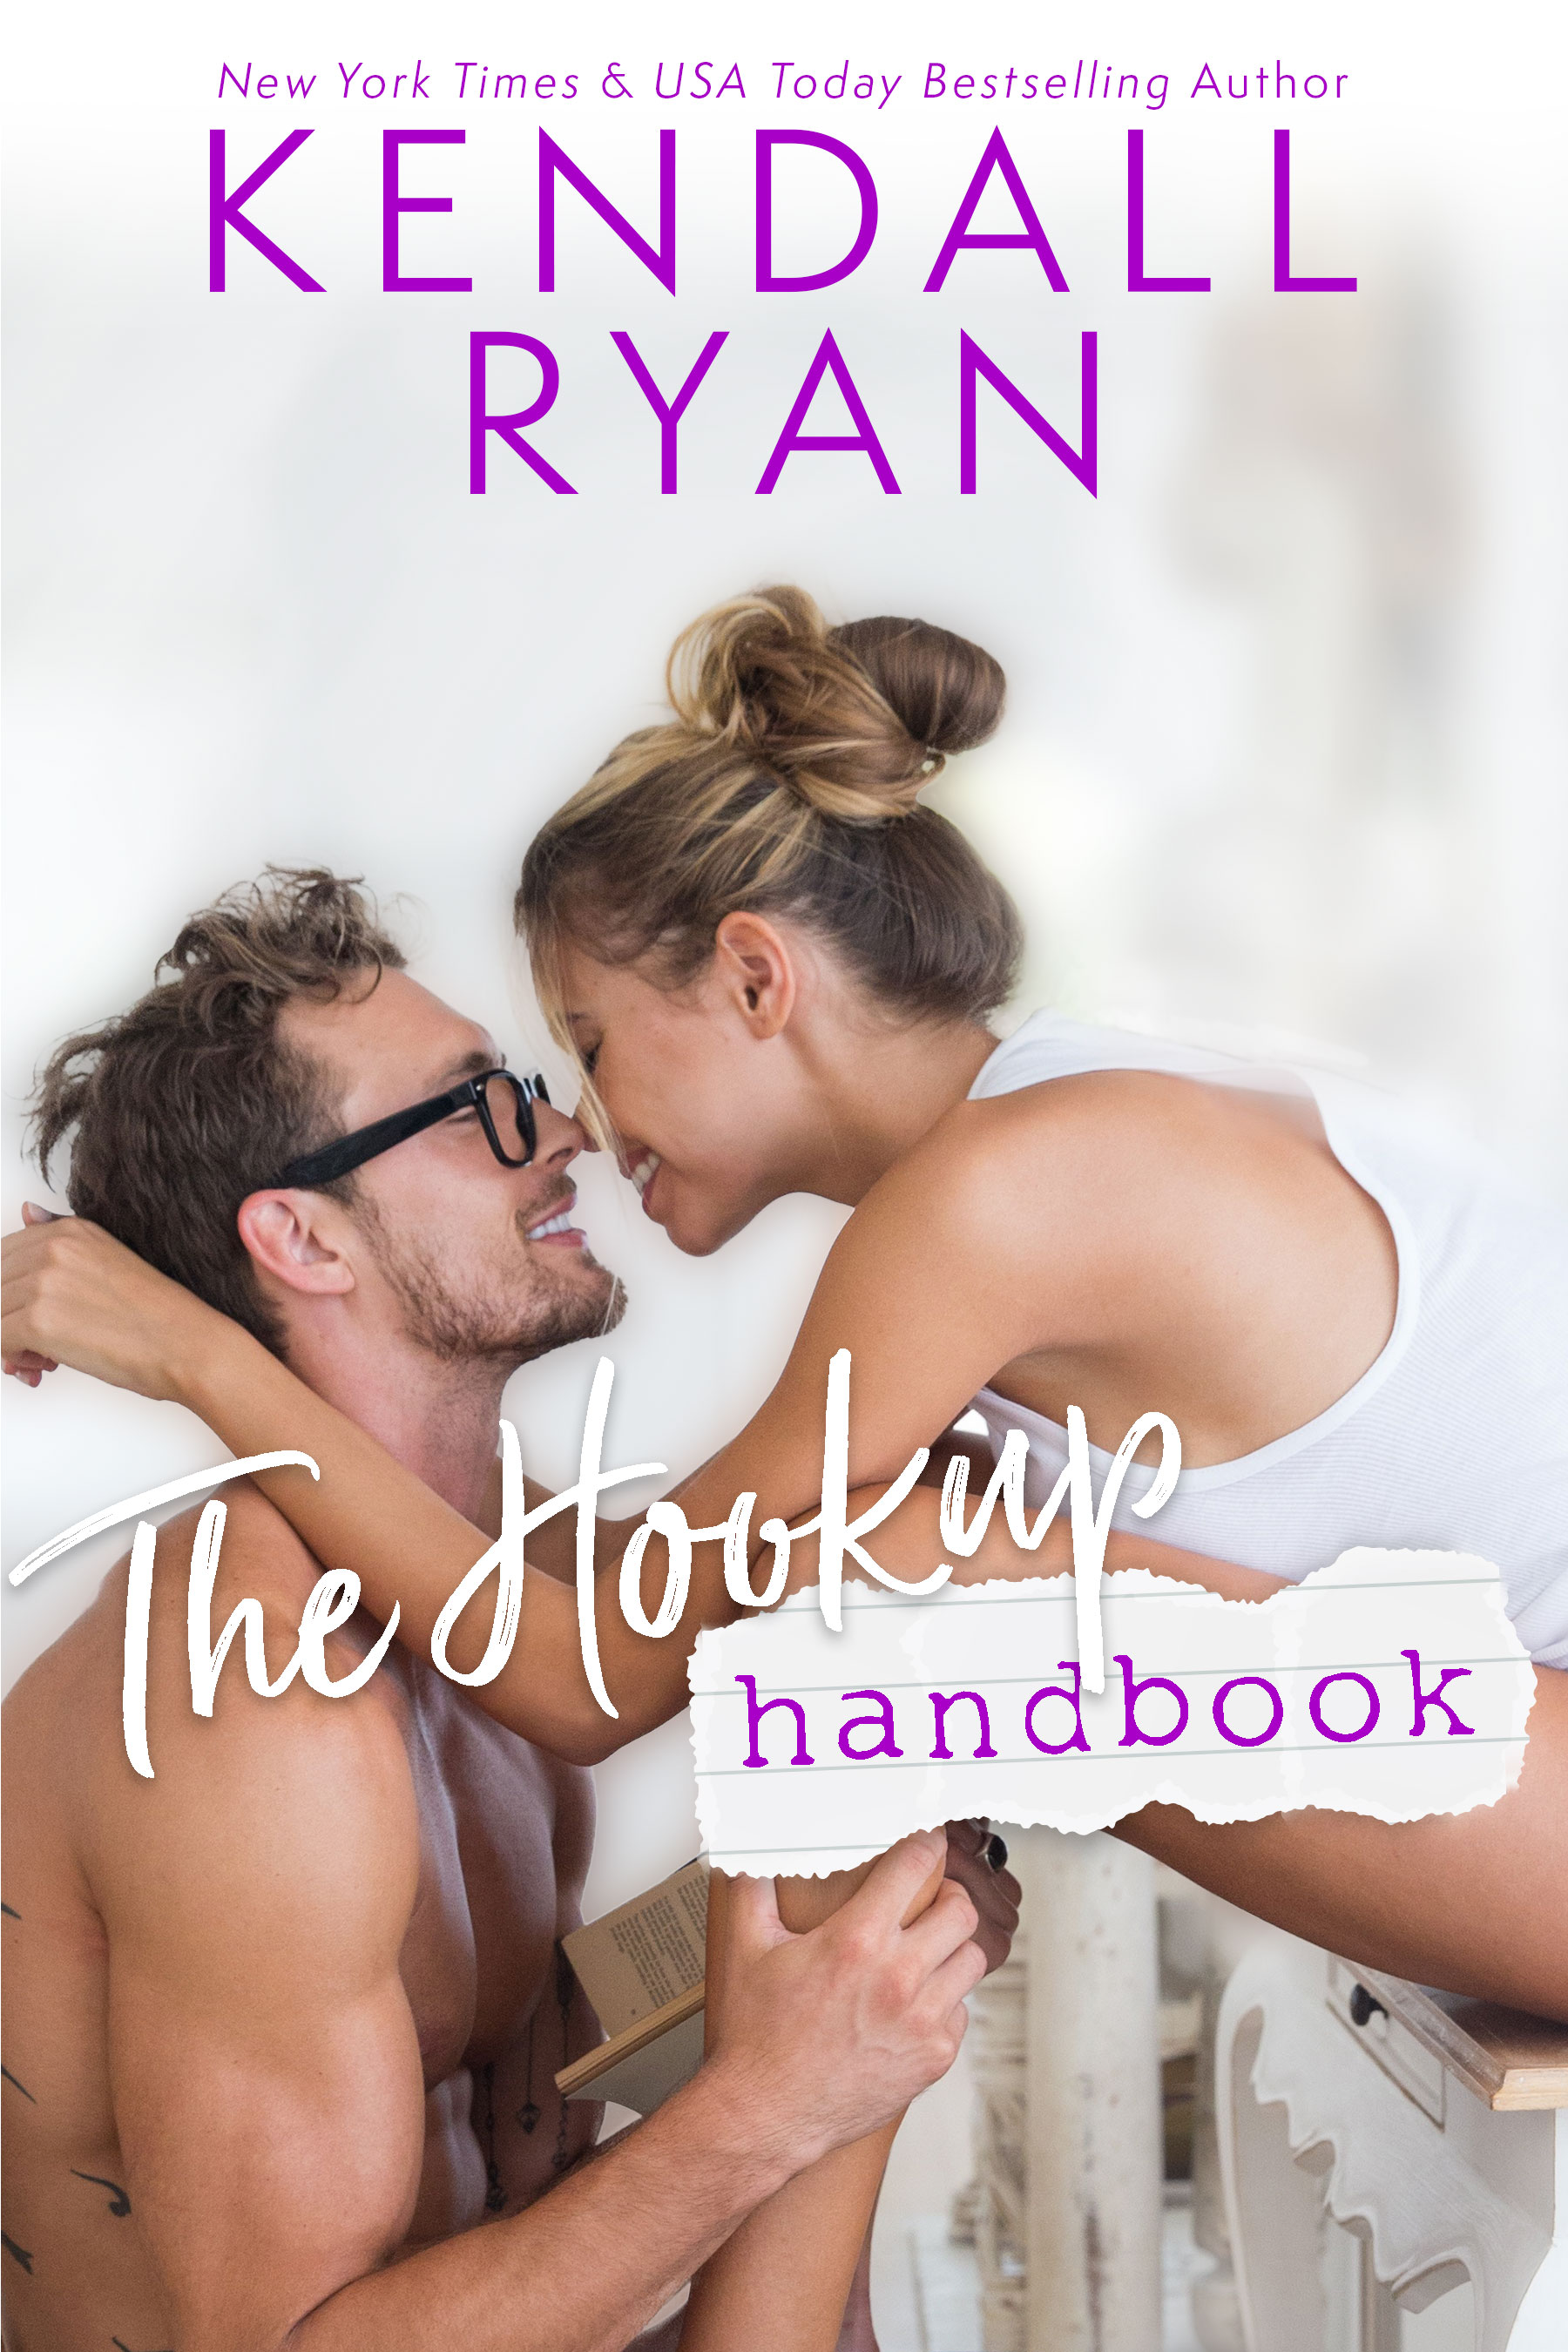 The Hookup Handbook by Kendall Ryan [Release Blitz]